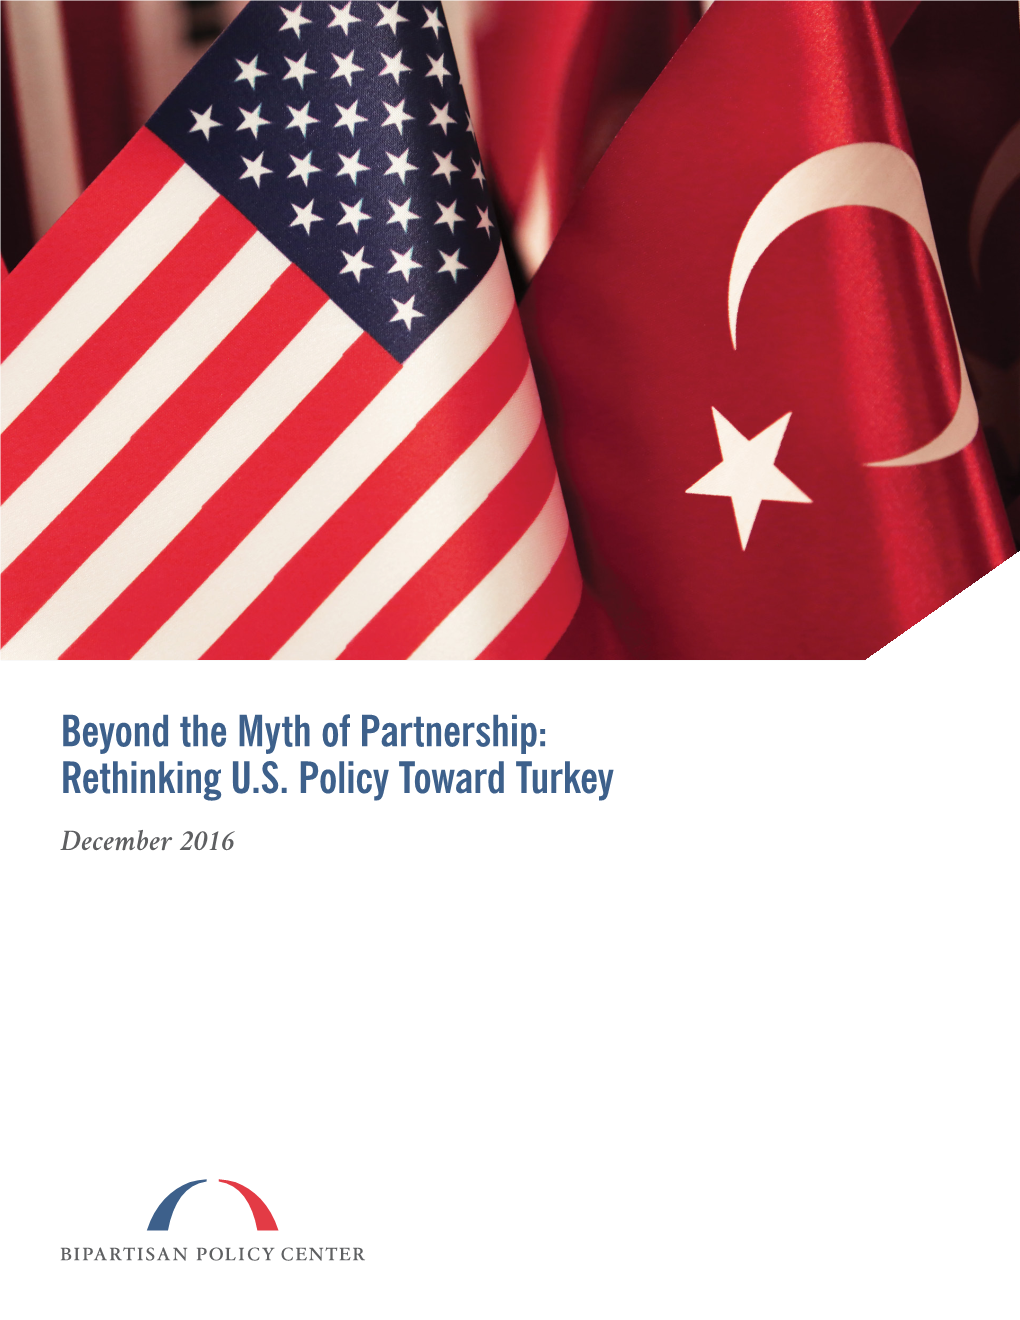 Beyond the Myth of Partnership: Rethinking U.S. Policy Toward Turkey